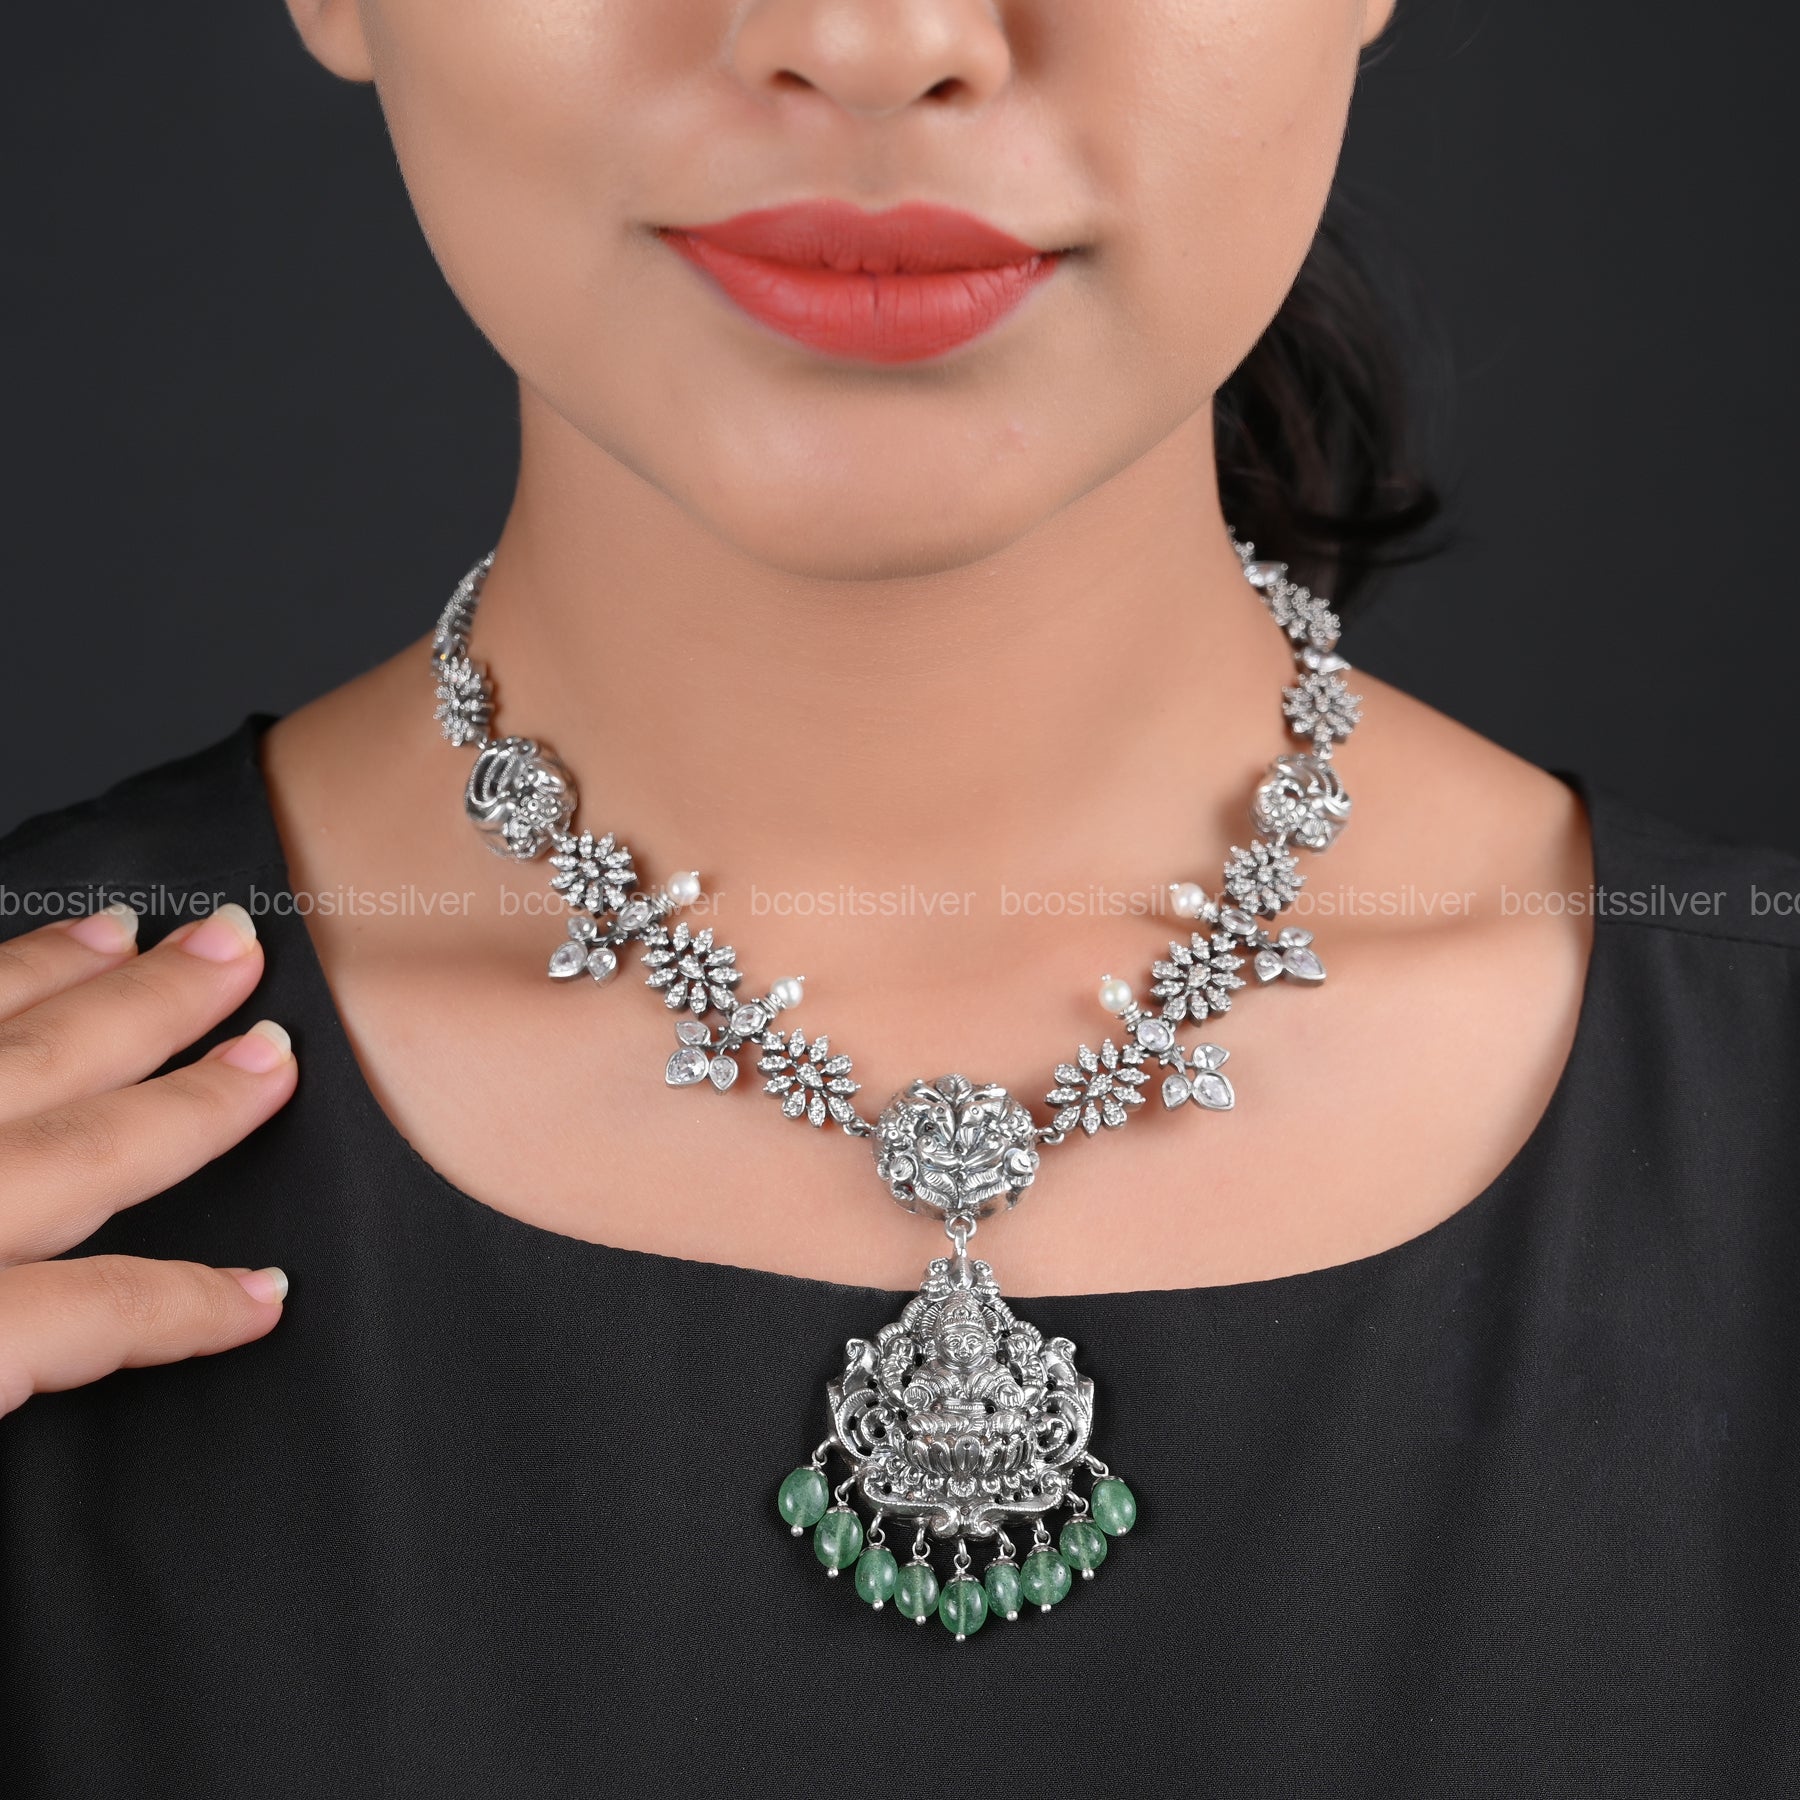 Oxidized Silver Necklace - 5050